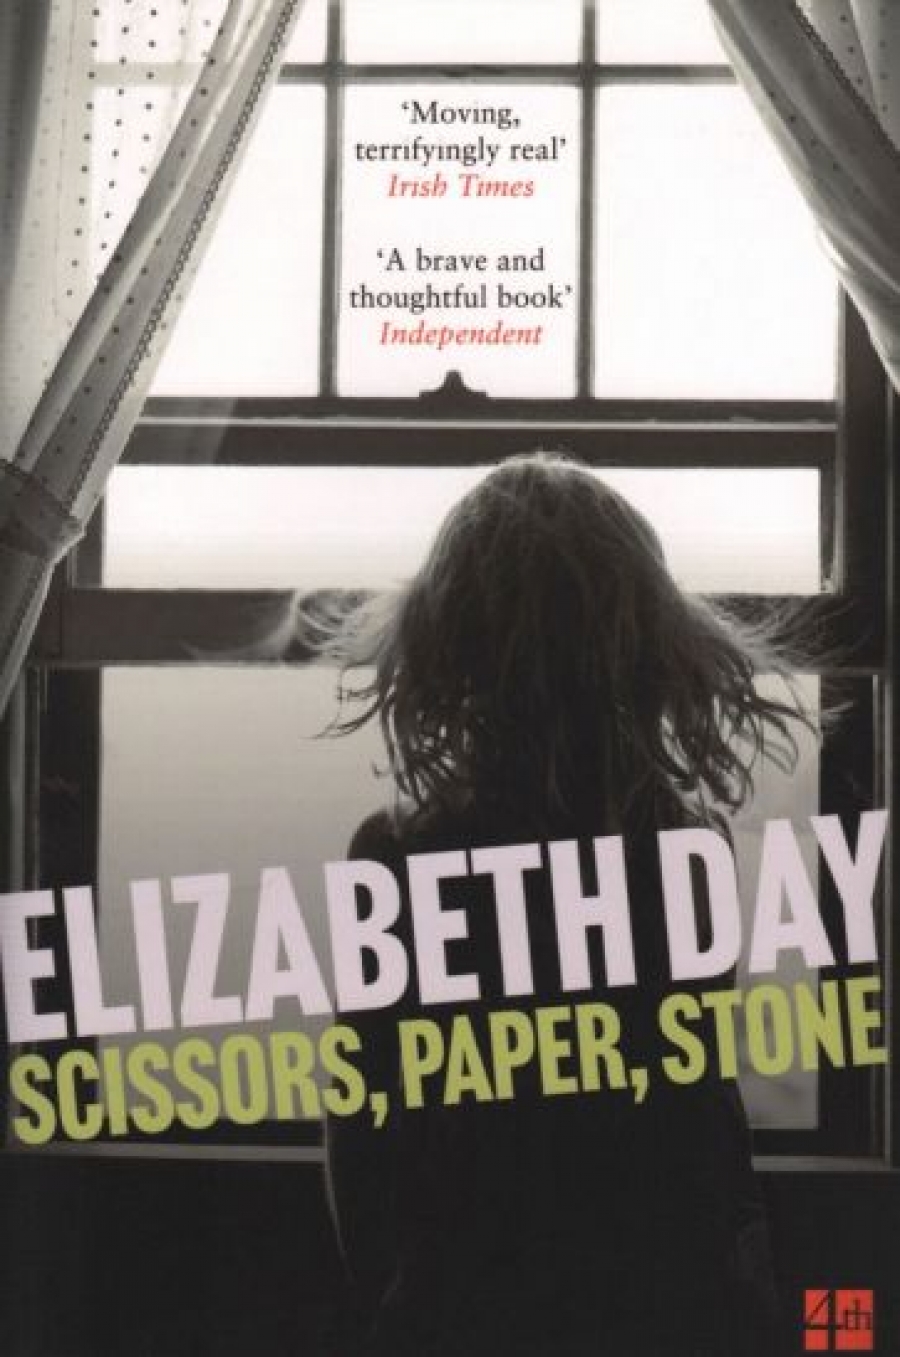 Day Elizabeth Scissors, Paper, Stone 